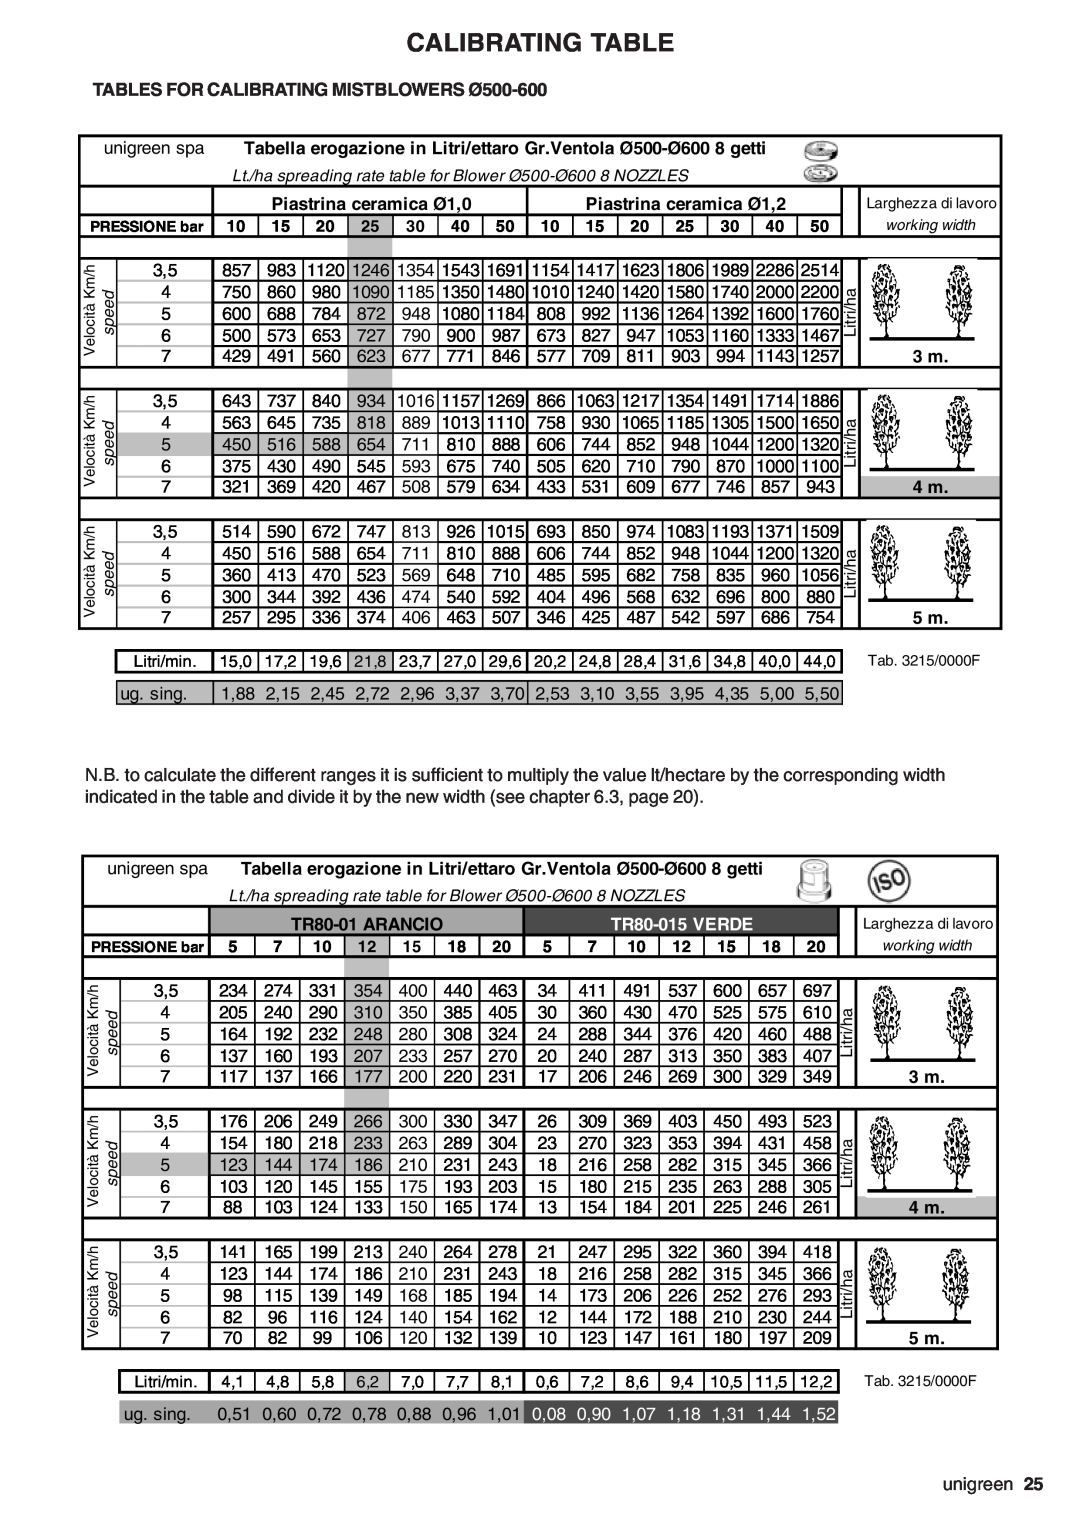 Unigreen LASER-FUTURA- EXPO series AT STD/TOP - AT BASE manual TR80-015VERDE, 0,08, 0,90, 1,07, 1,18, 1,31, 1,44, 1,52 